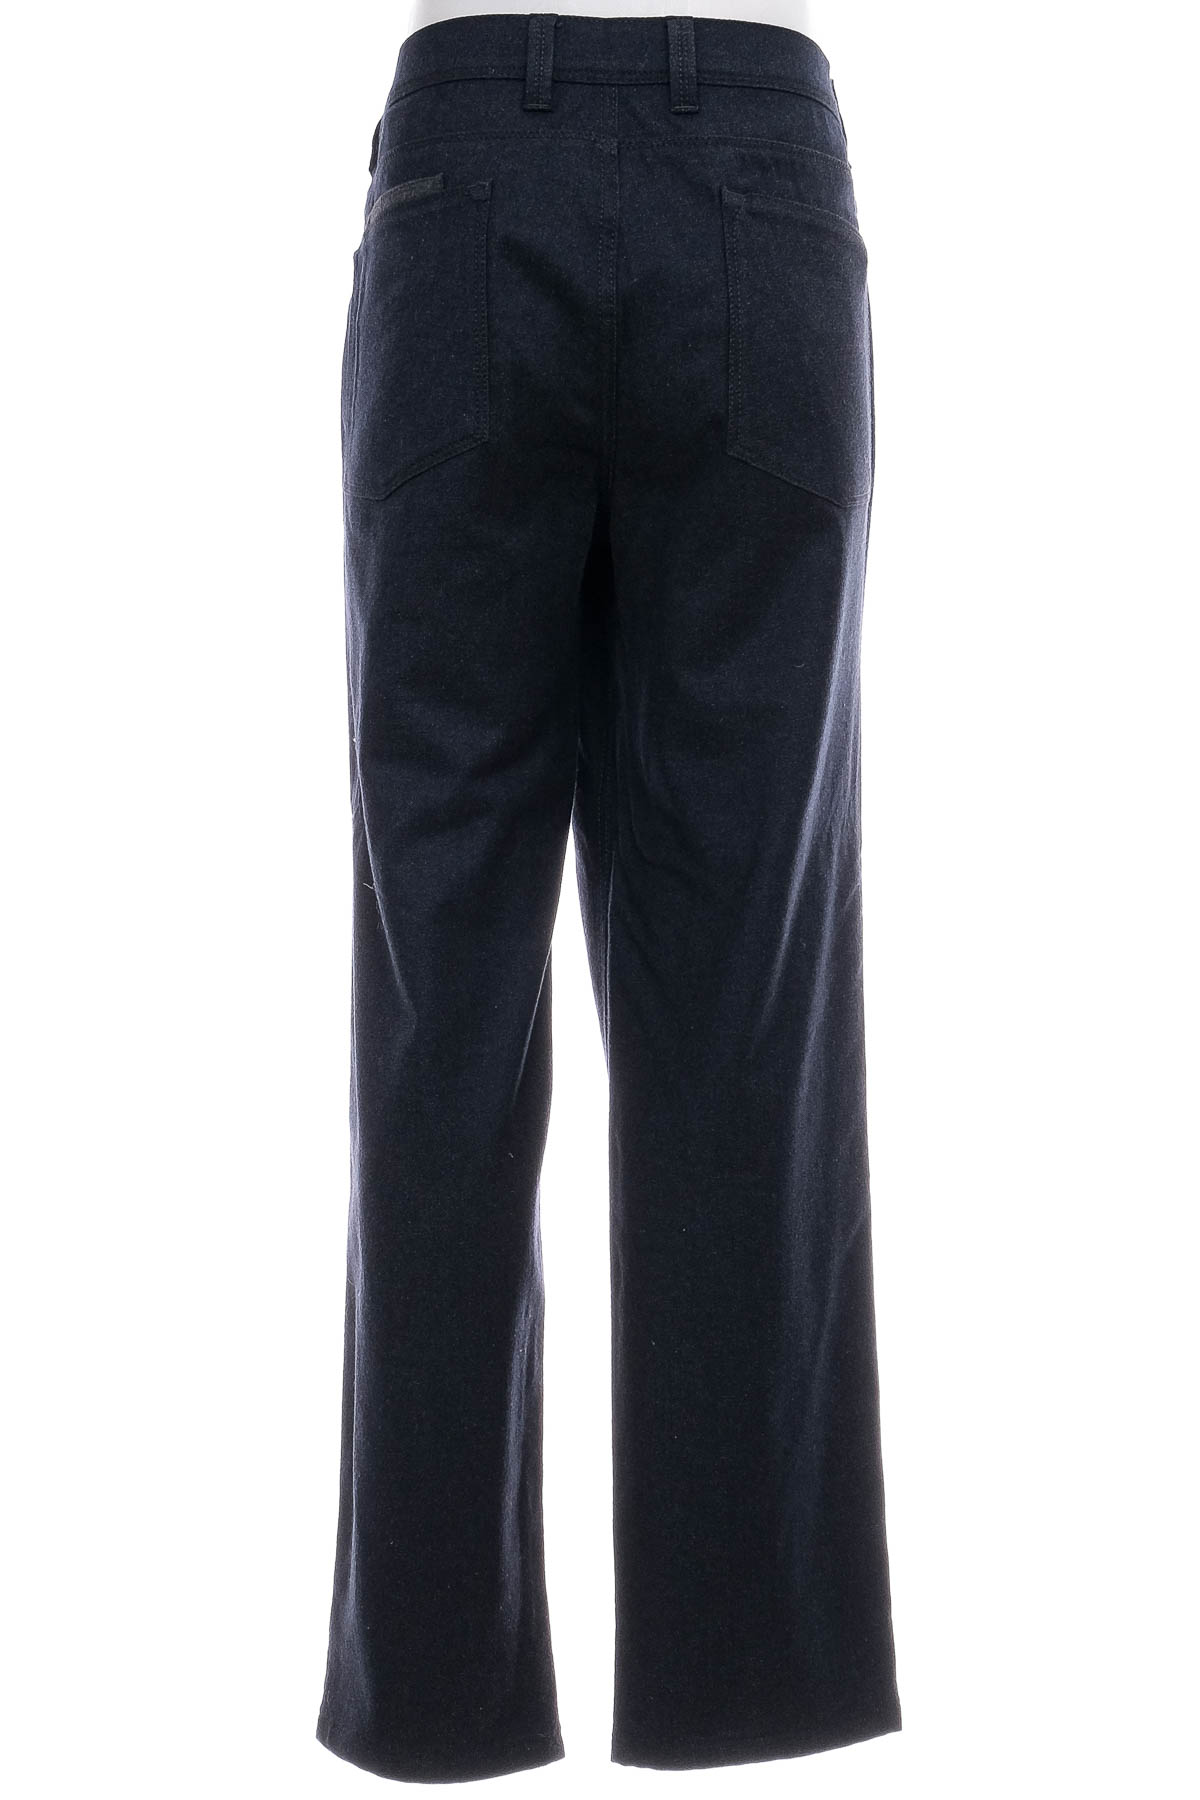 Men's trousers - Hirmer - 1